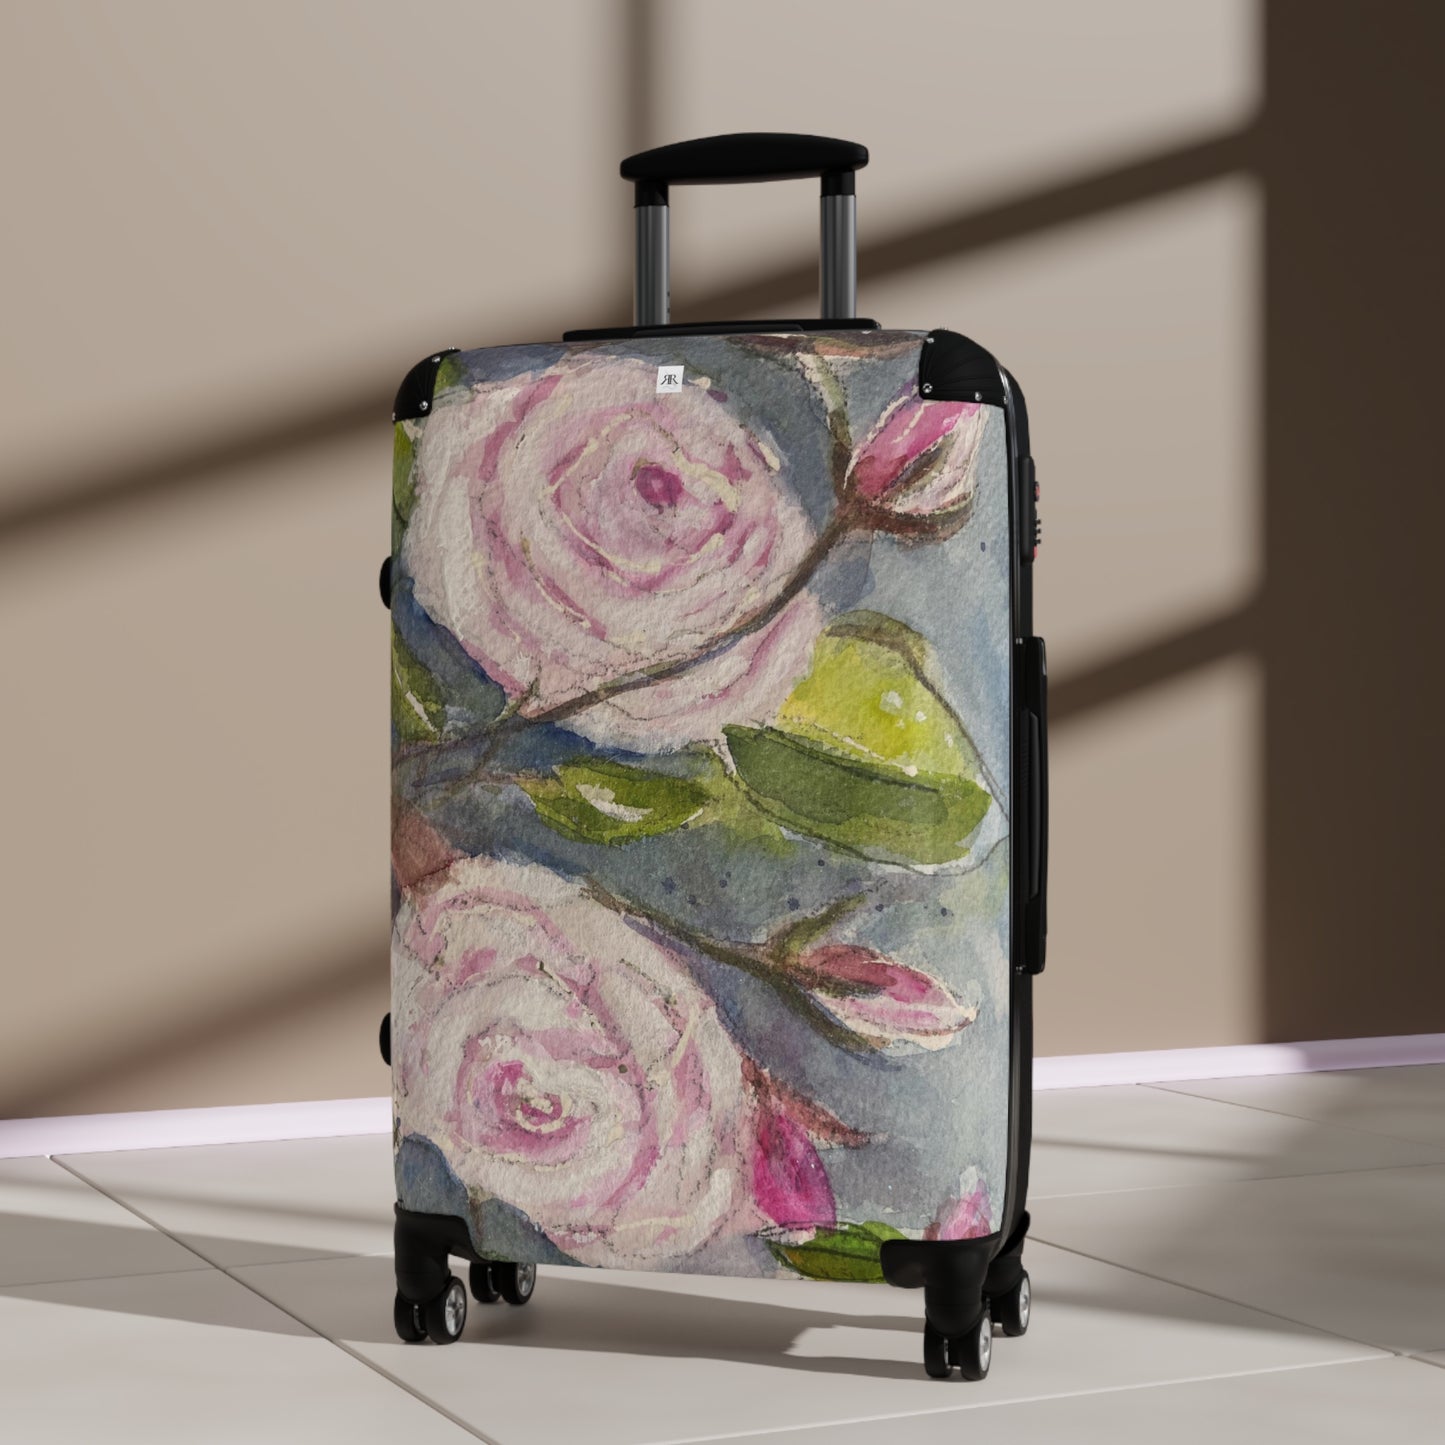 Valise à main avec roses blanches moelleuses 